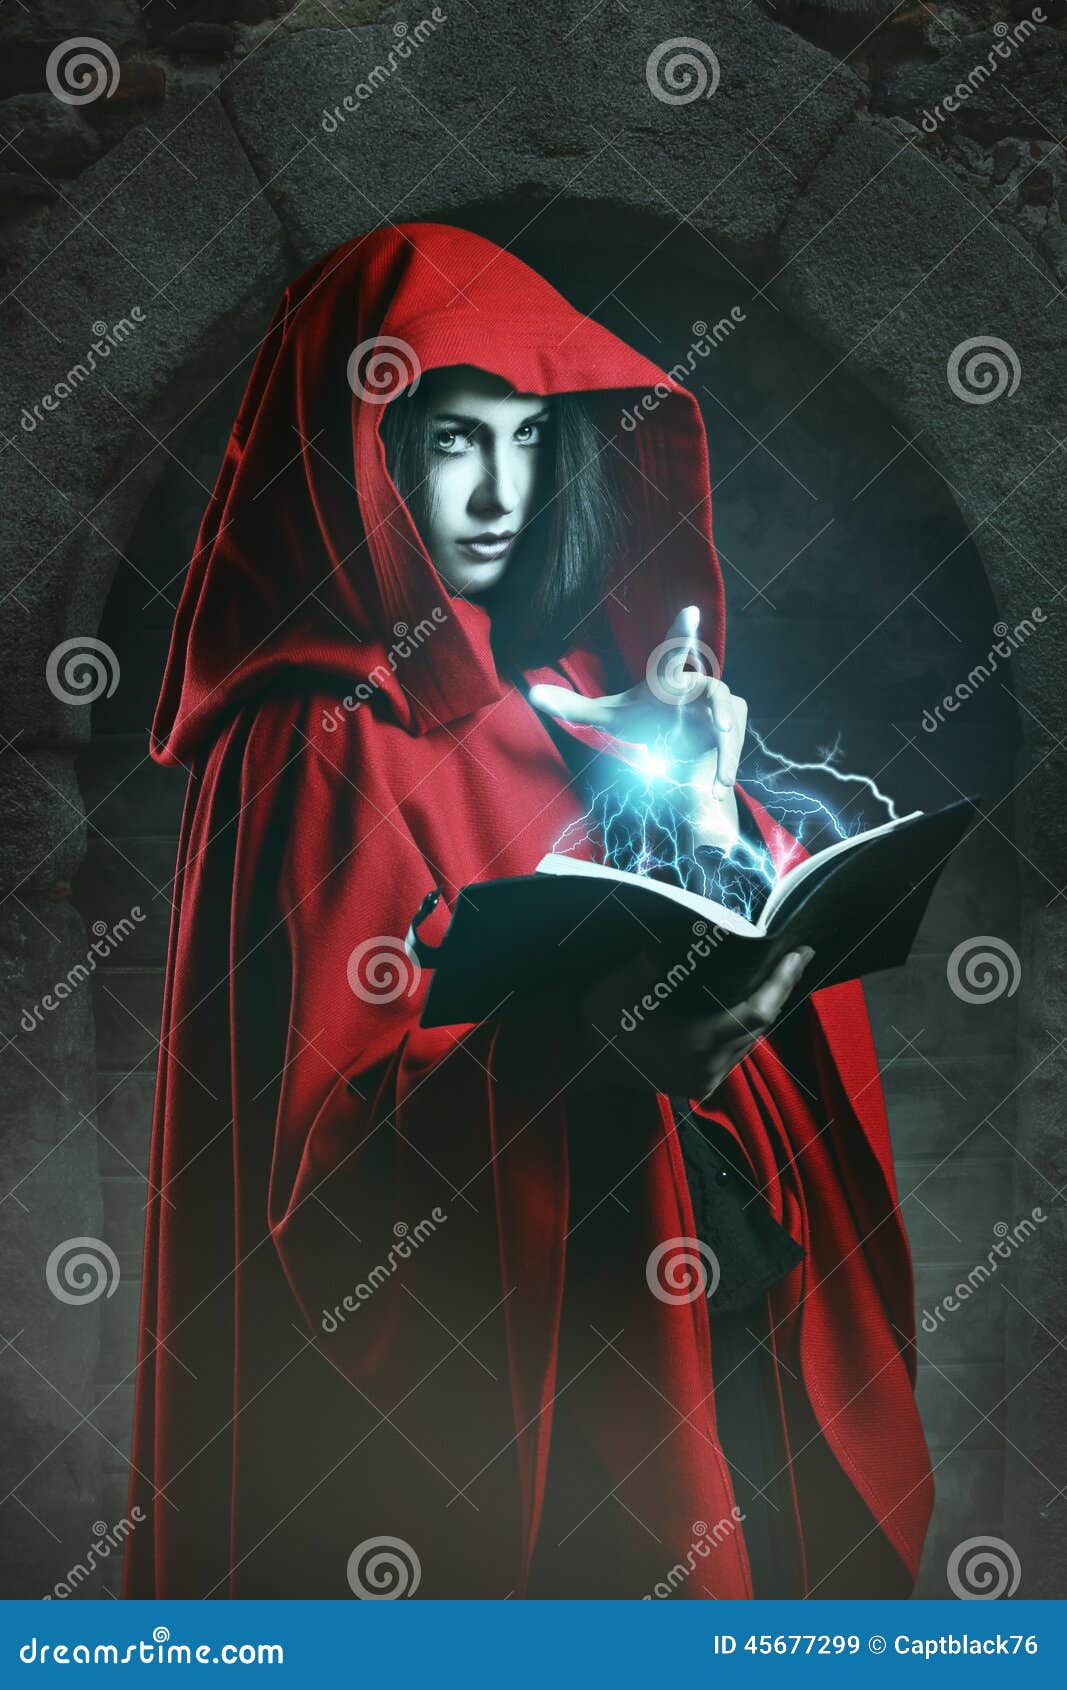 red-hooded-woman-casting-powerful-magic-using-fantasy-studio-shot-45677299.jpg